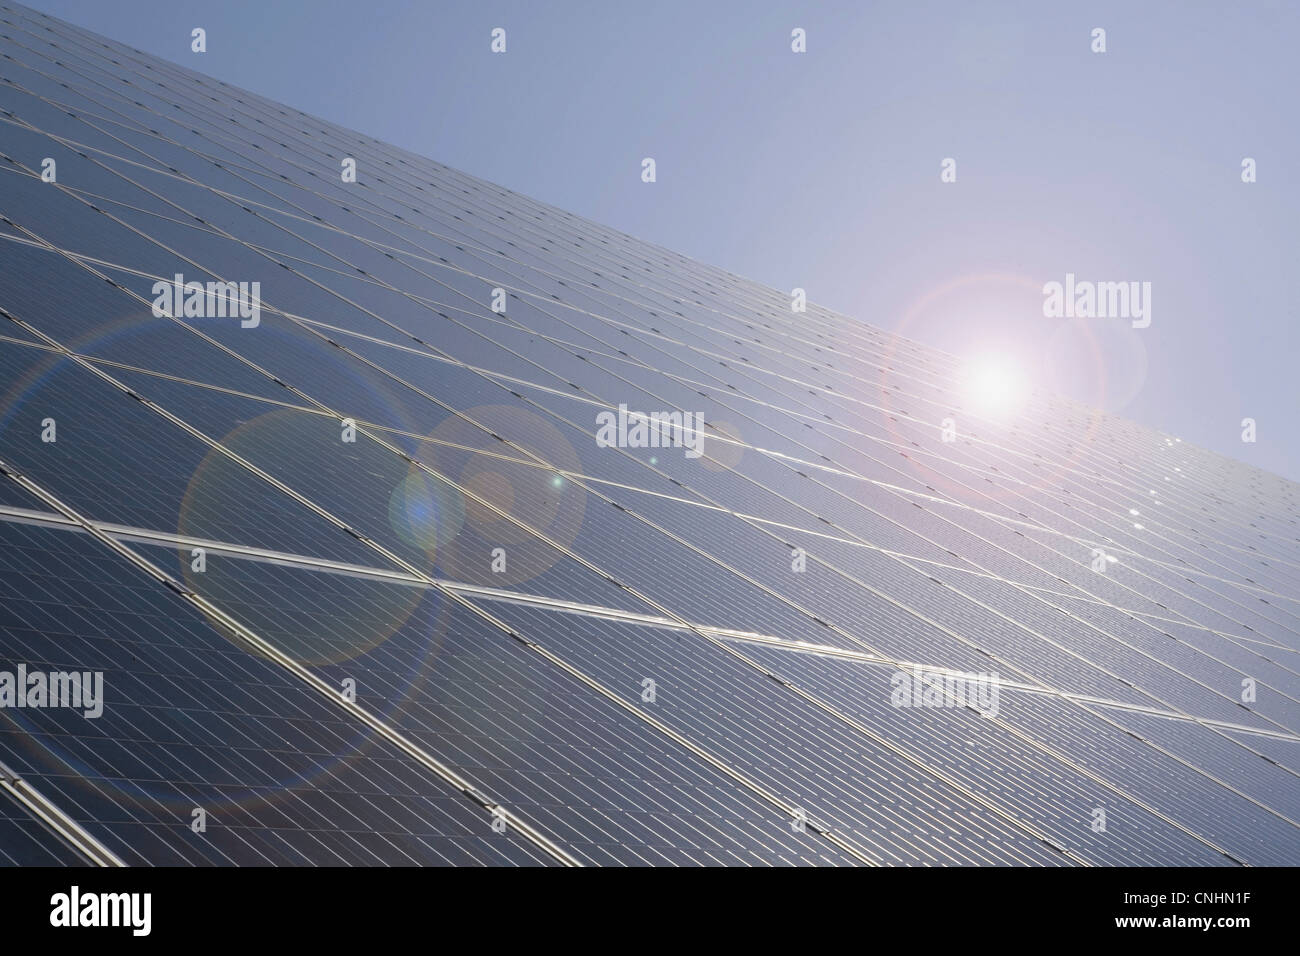 Detail of solar panels Stock Photo